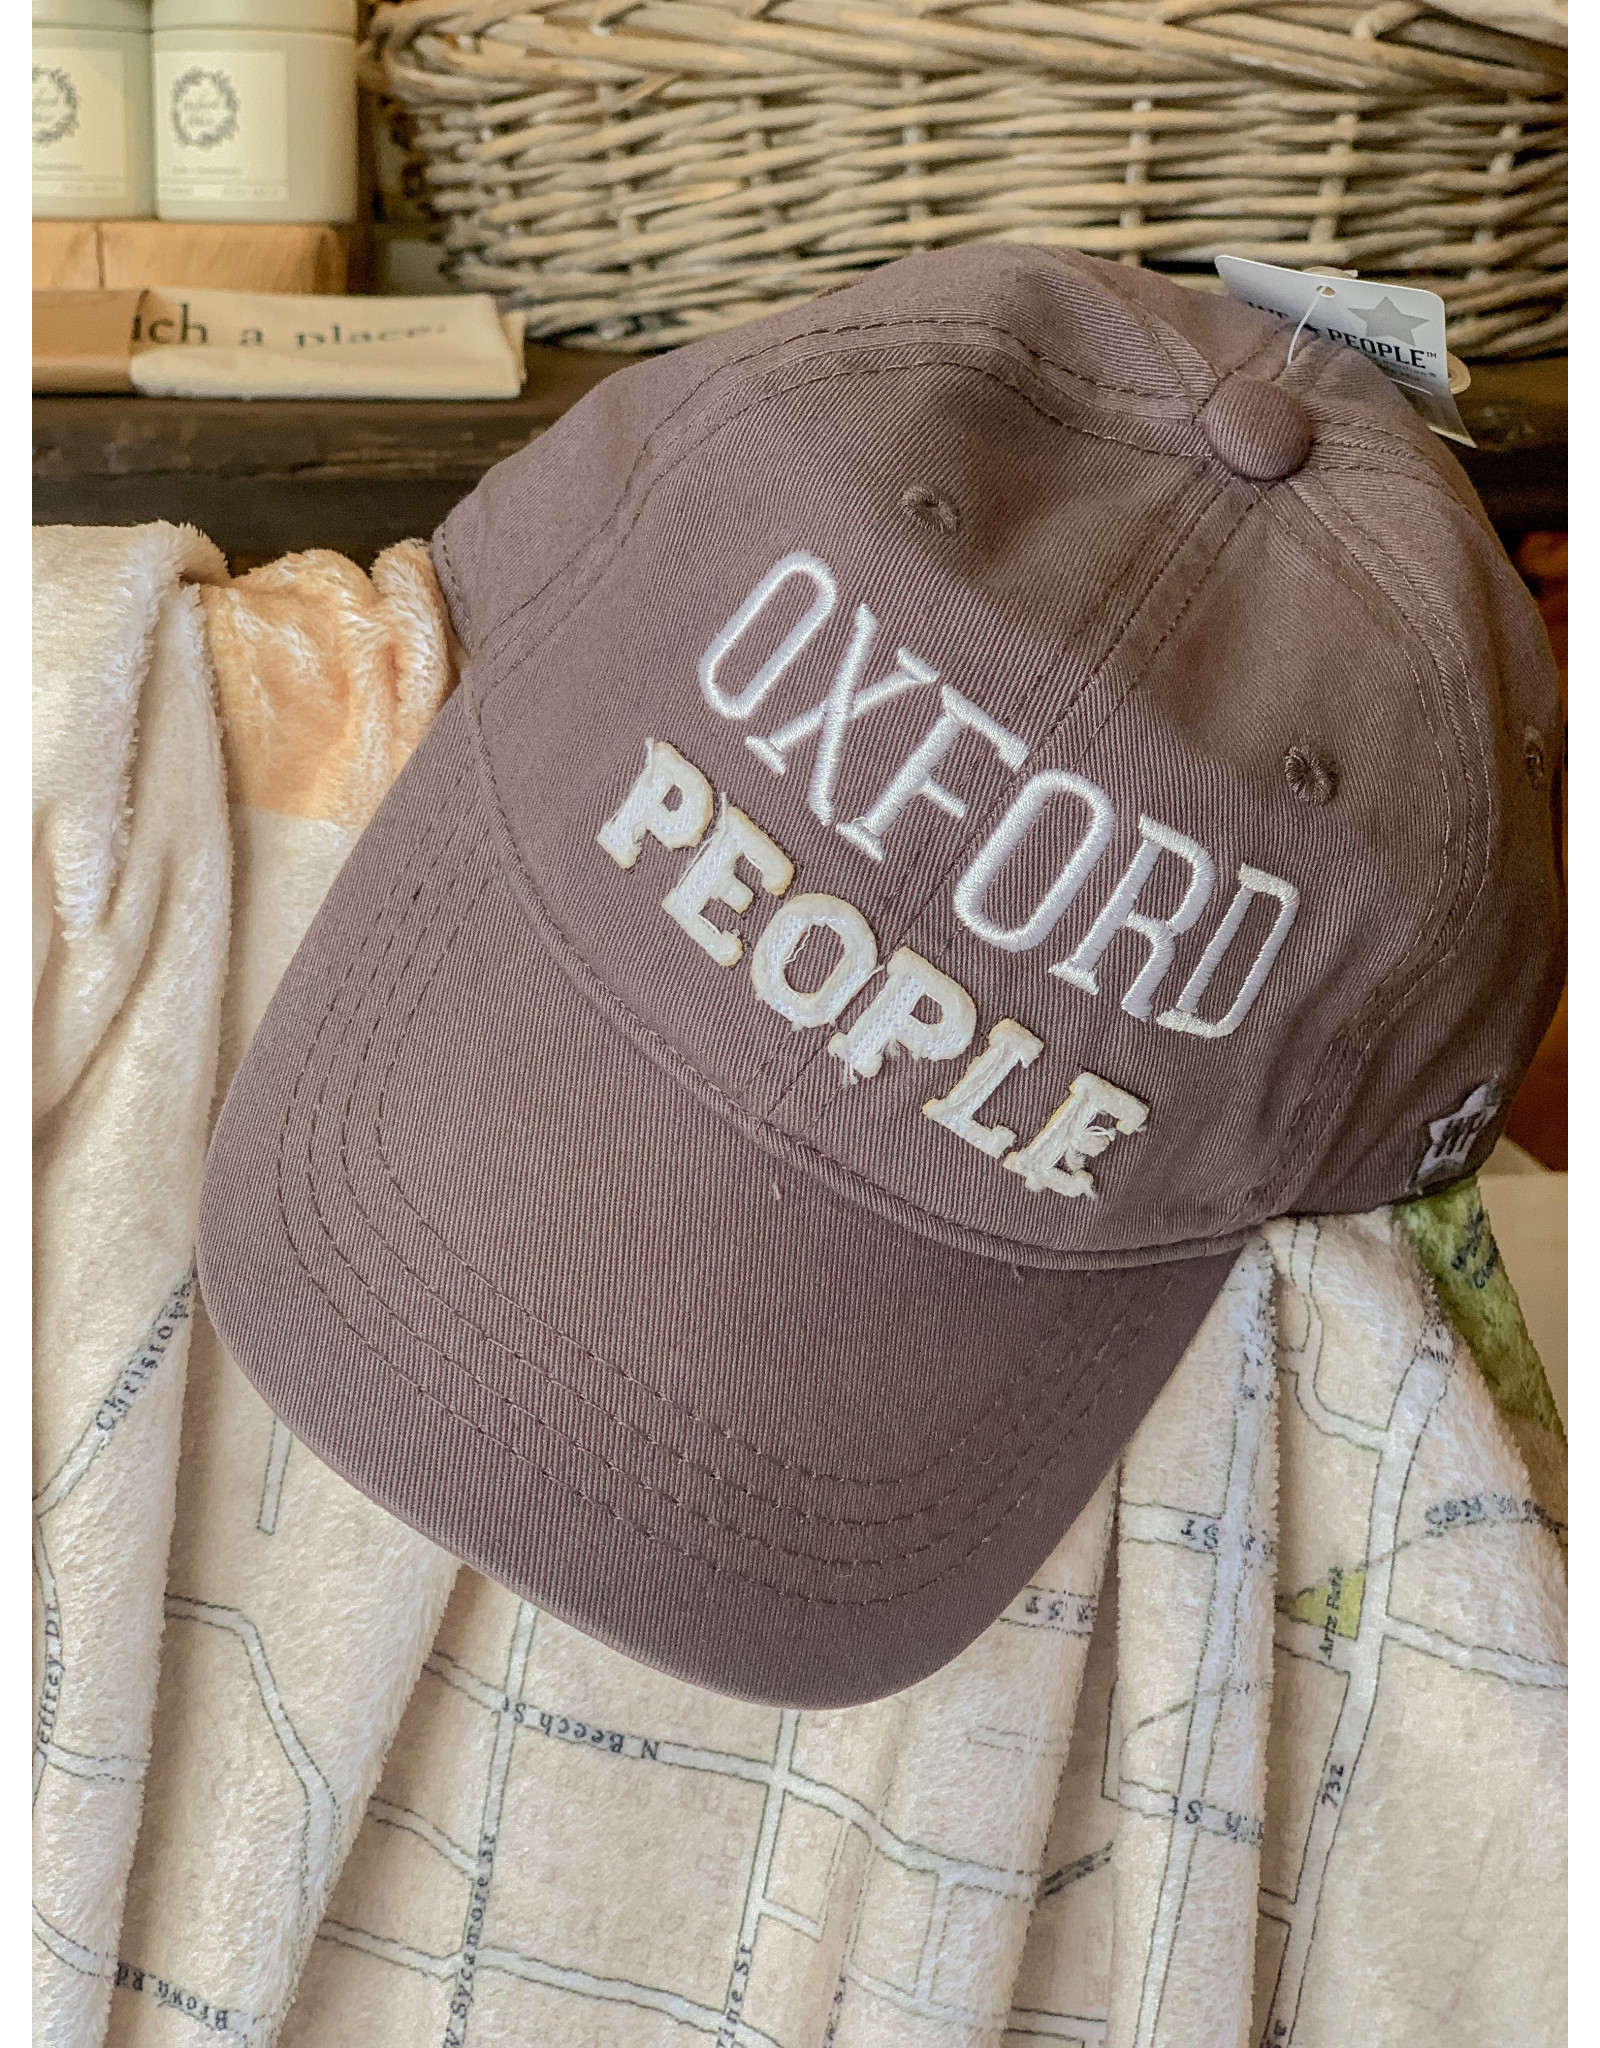 We People Oxford People Hat, gray